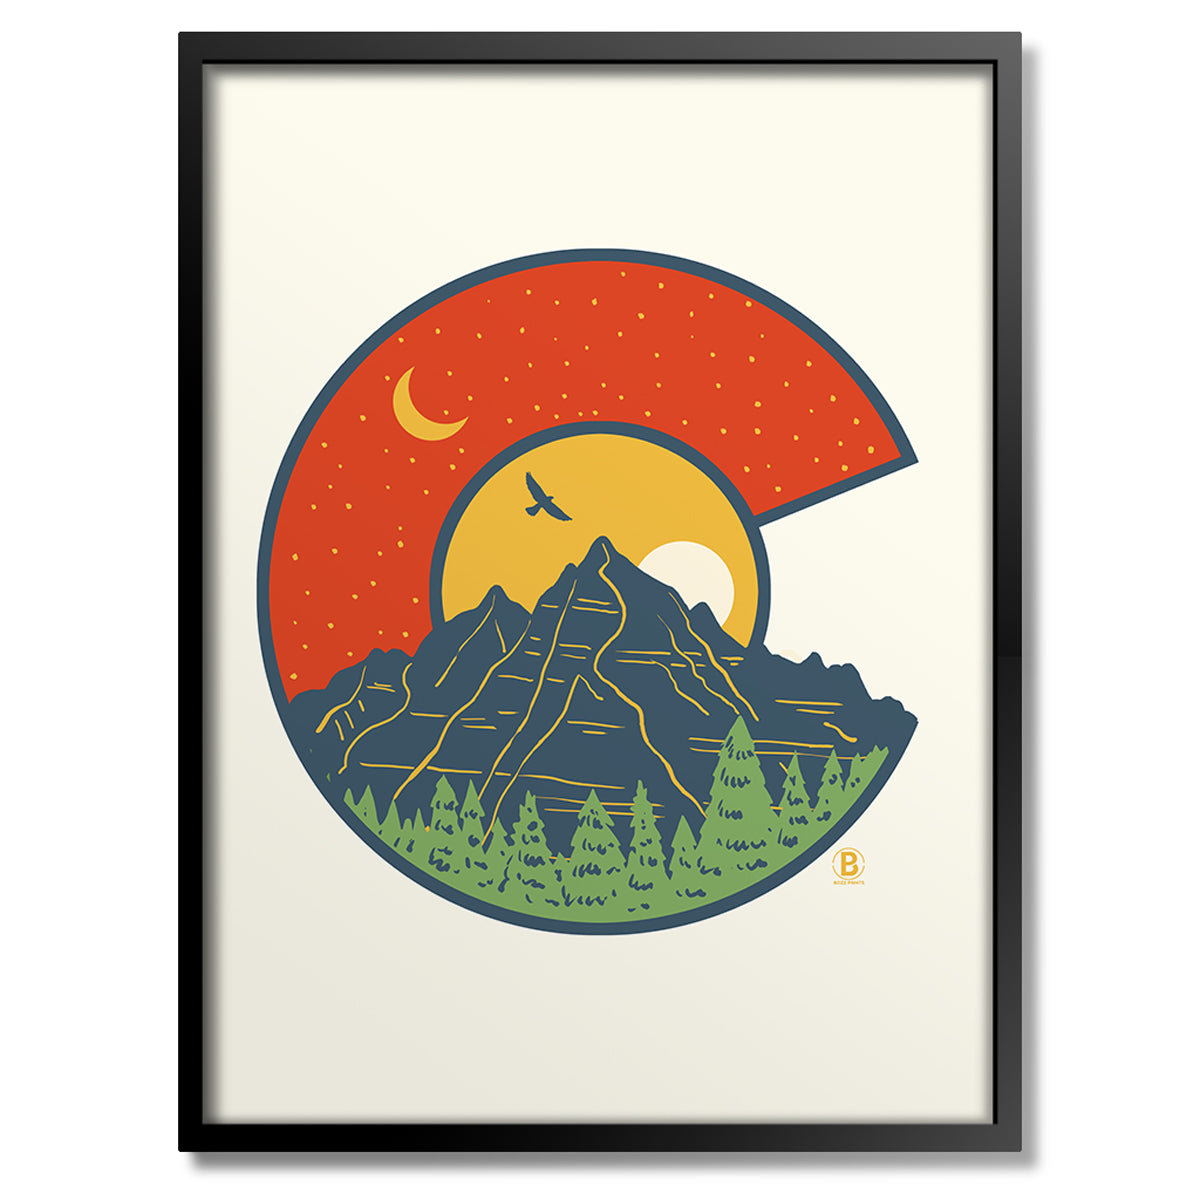 Layers of Colorado "C" Flag Print - Bozz Prints